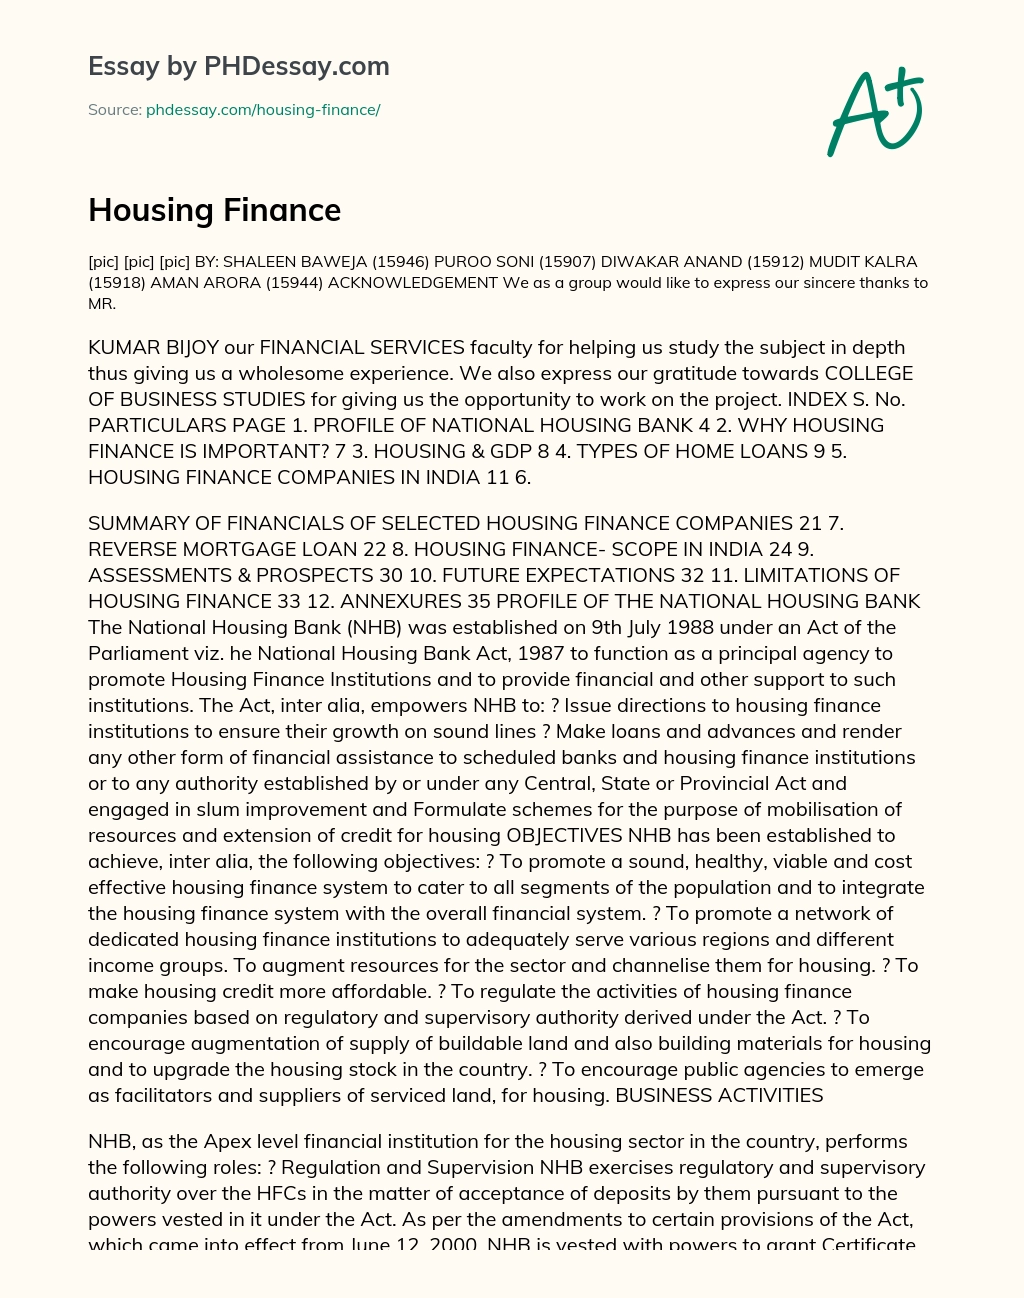 Housing Finance essay